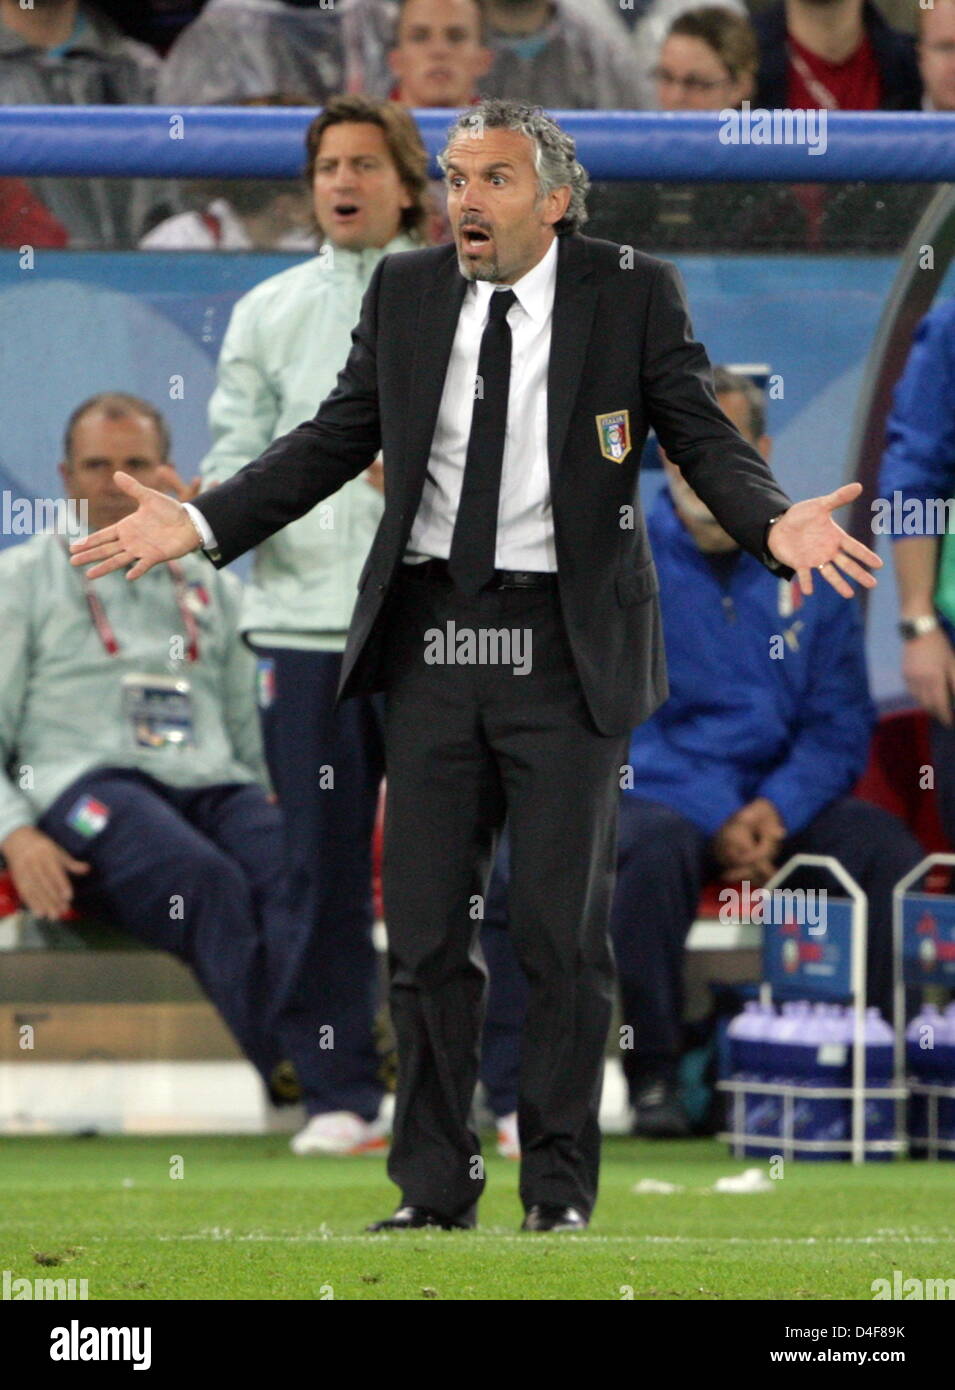 Italian coach Roberto Donadoni on 17 June 2008 during EURO 2008 group c match France - Italy in Zurich Switzerland. Photo: Oliver Berg dpa +++###dpa###+++ Stock Photo